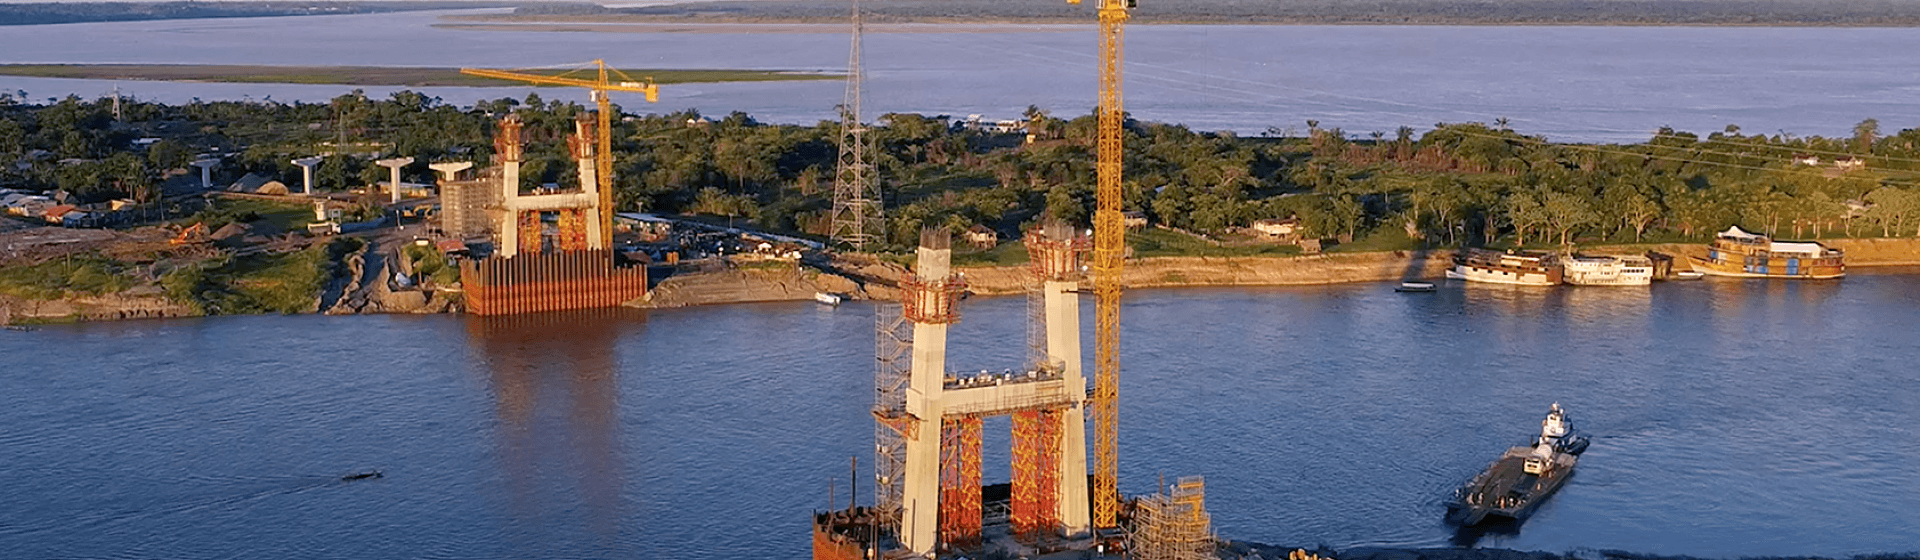 Potain-MC-310-K16-tower-crane-duo-erects-1410-ft-bridge-in-Perus-Amazon-01.png